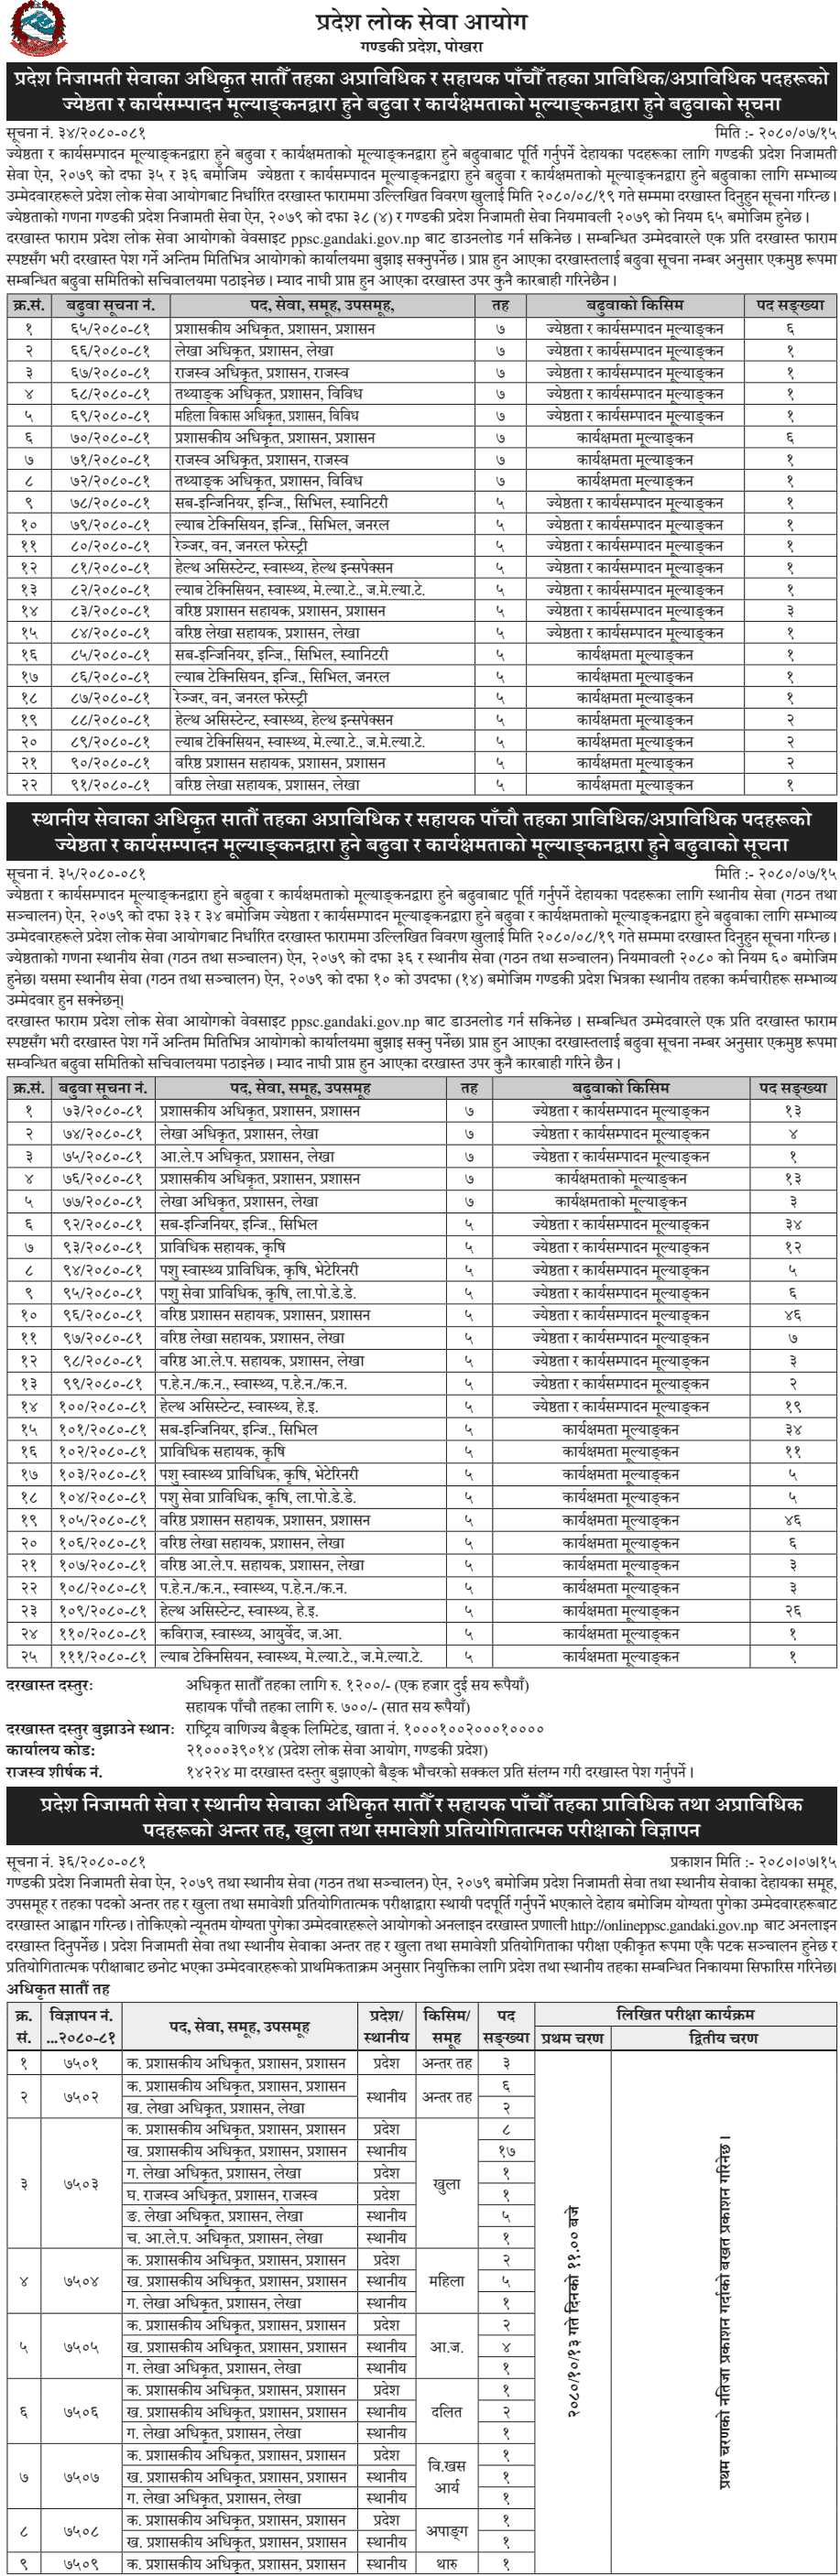 Gandaki Pradesh Lok Sewa Aayog Vacancy 2080 for 5th and 7th Level